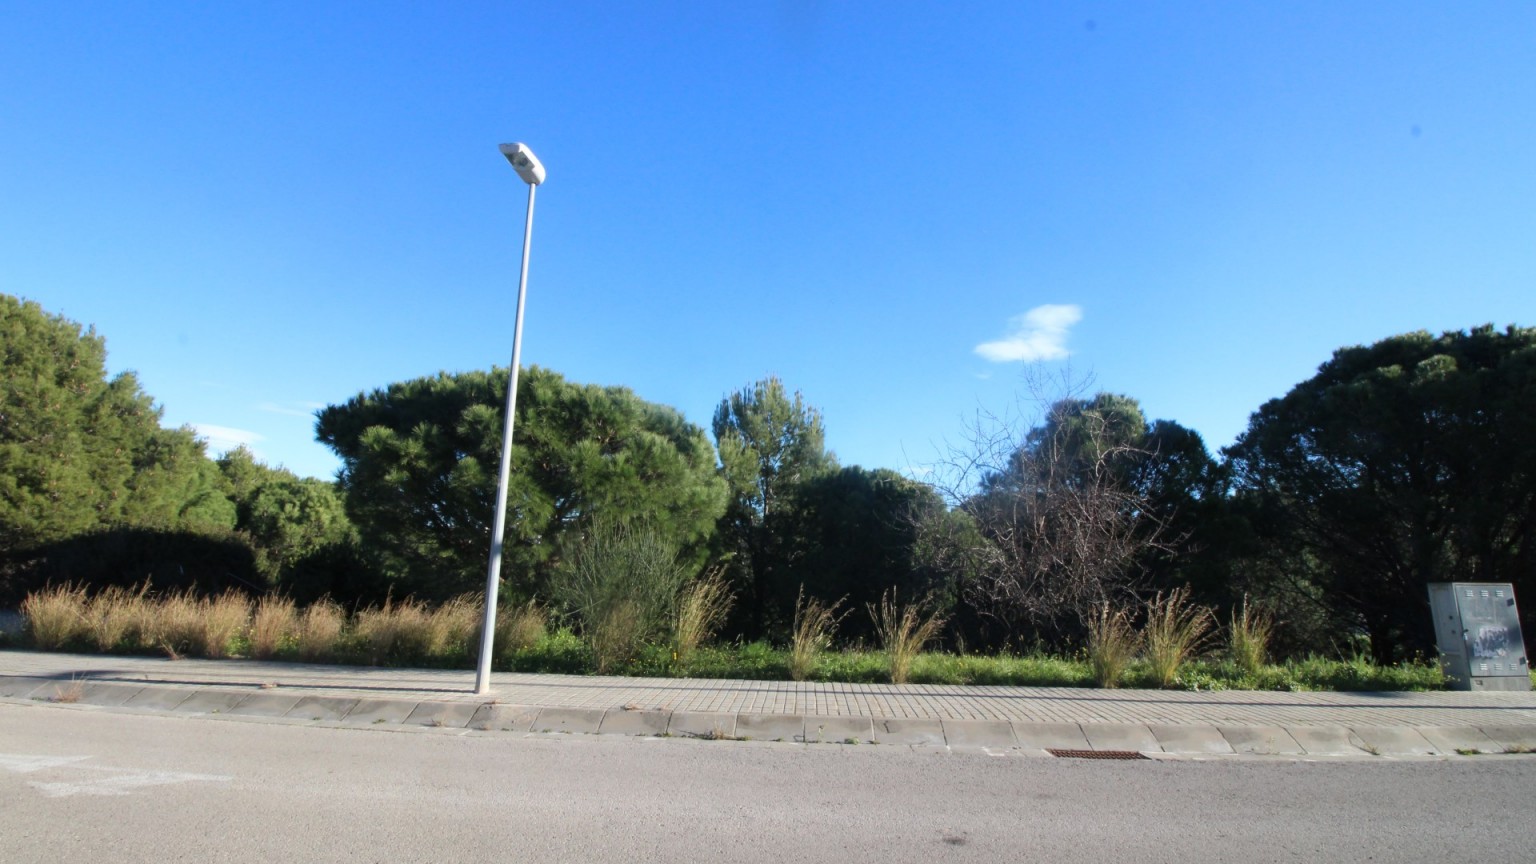 Plot of land for sale in La Vila area